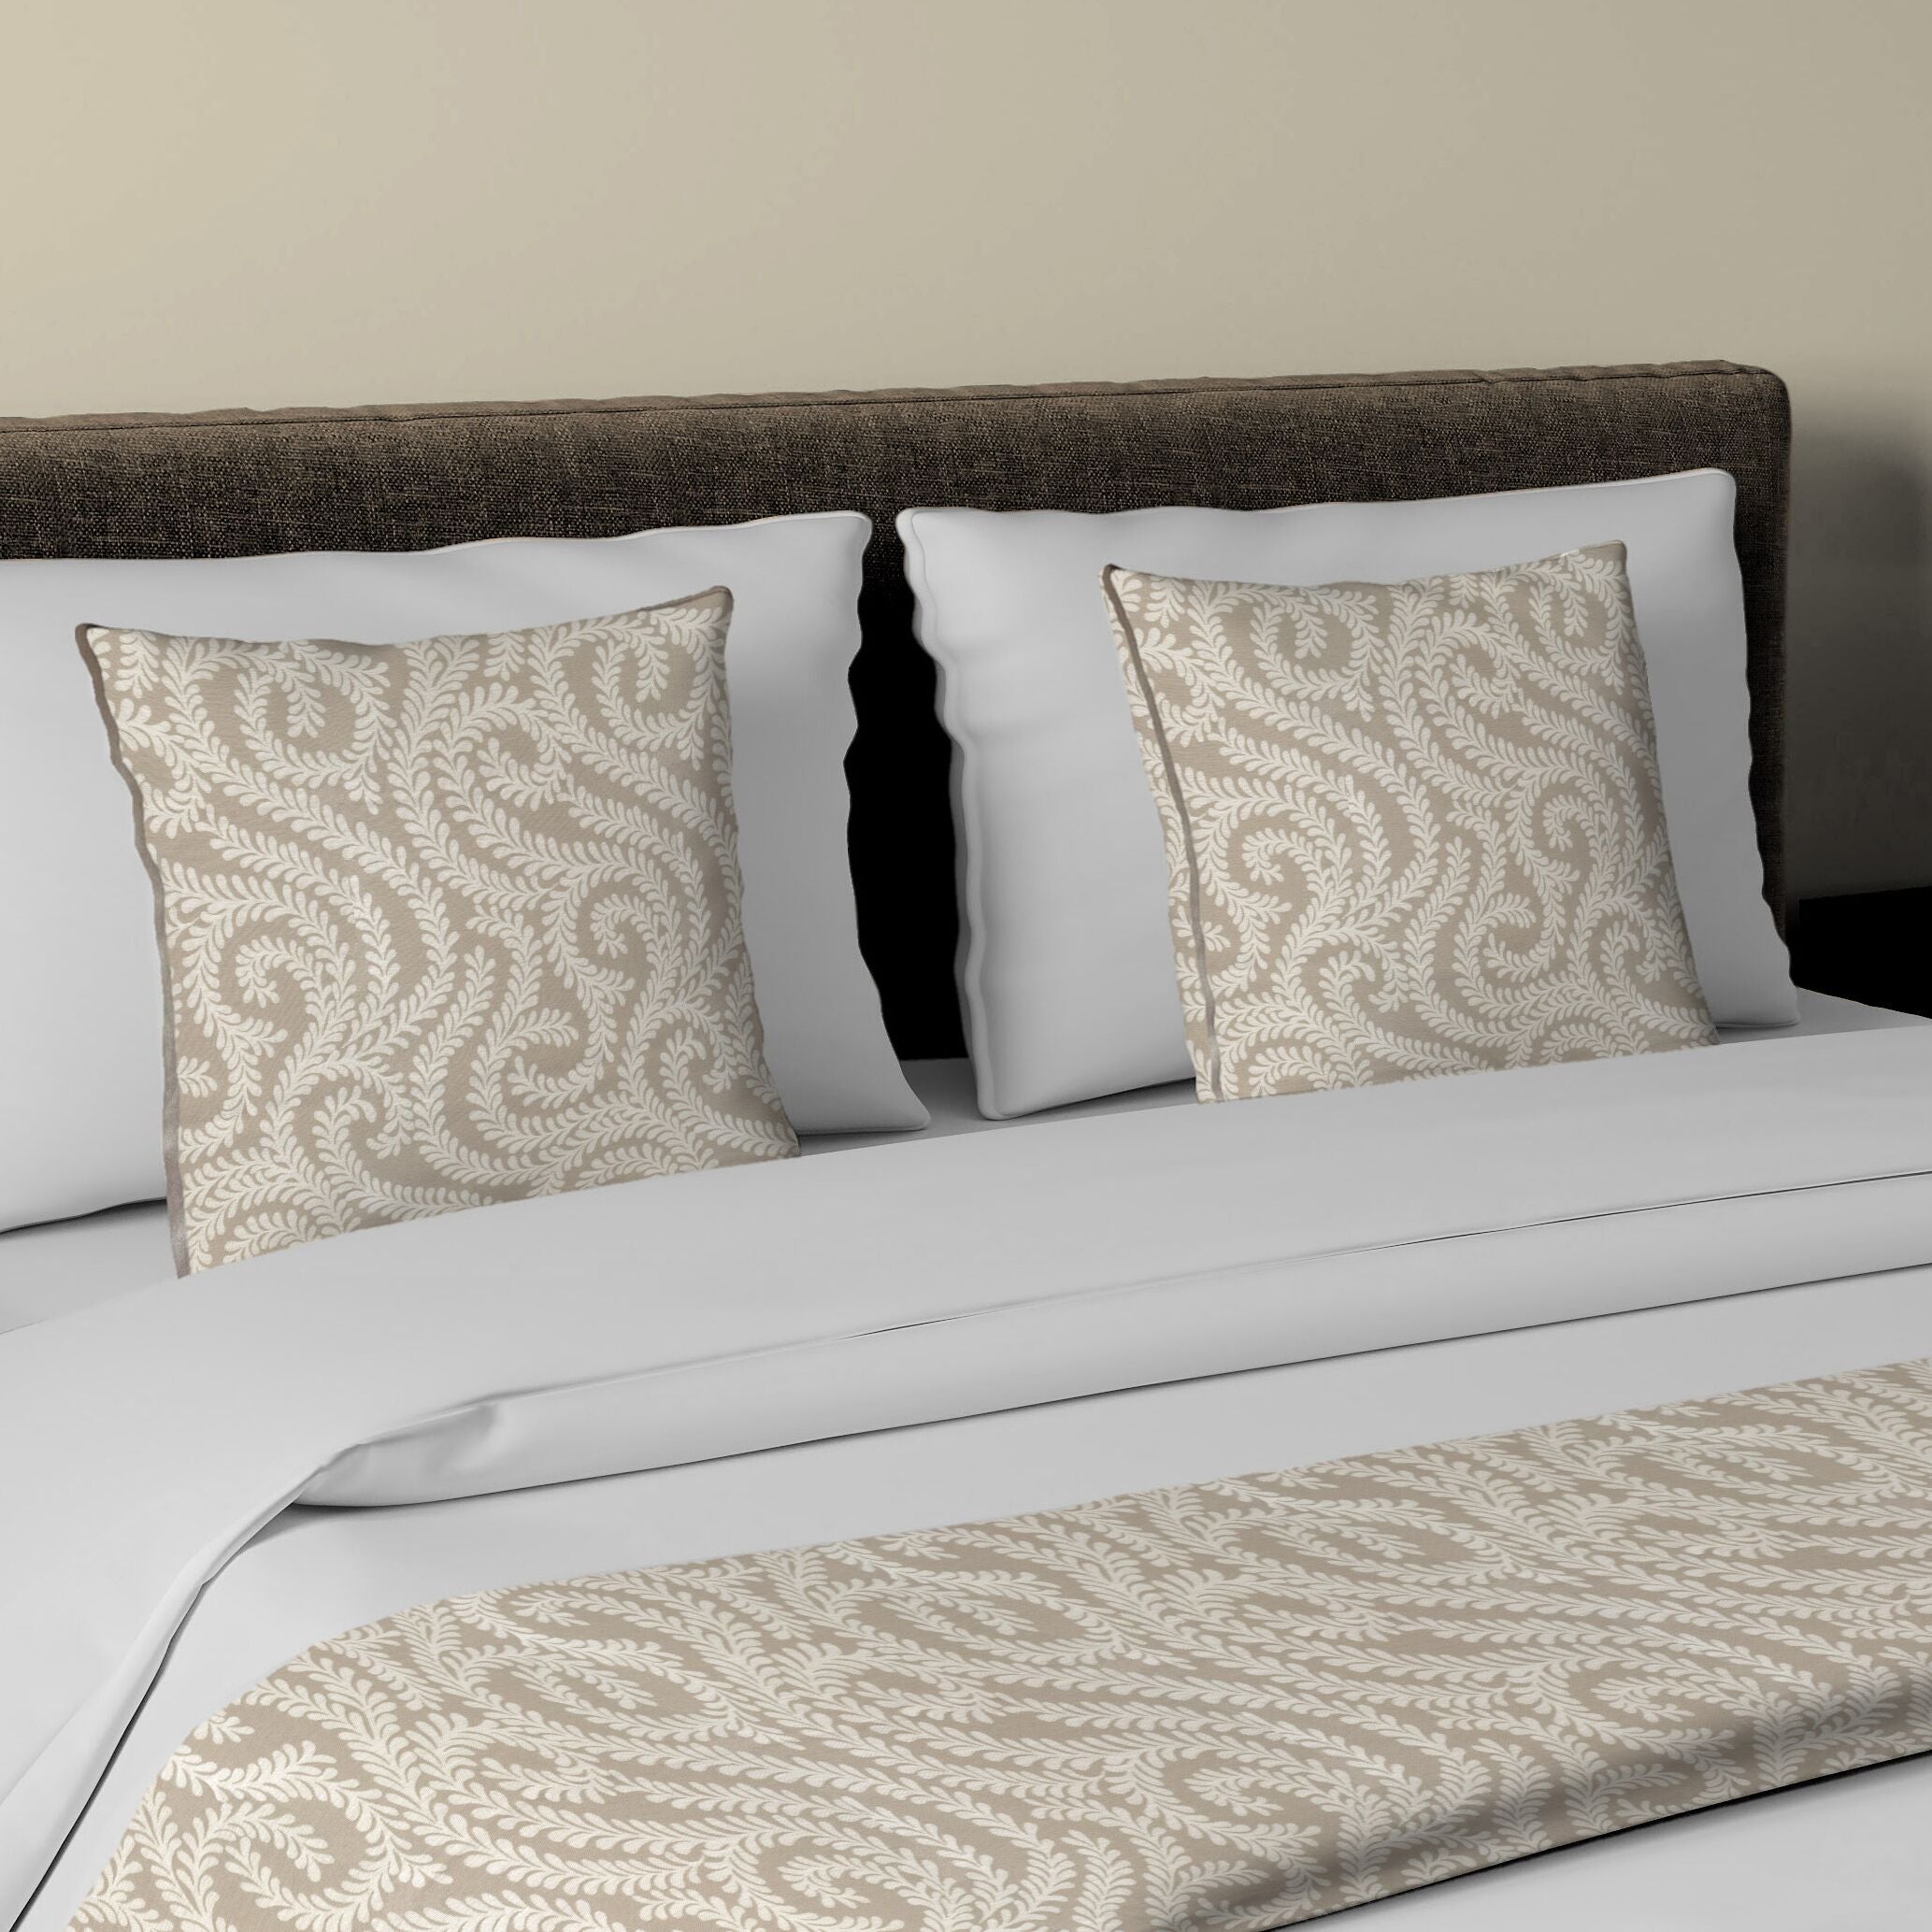 McAlister Textiles Little Leaf Pale Beige Bedding Set Bedding Set Runner (50x165cm) + 1x Cushion Cover 